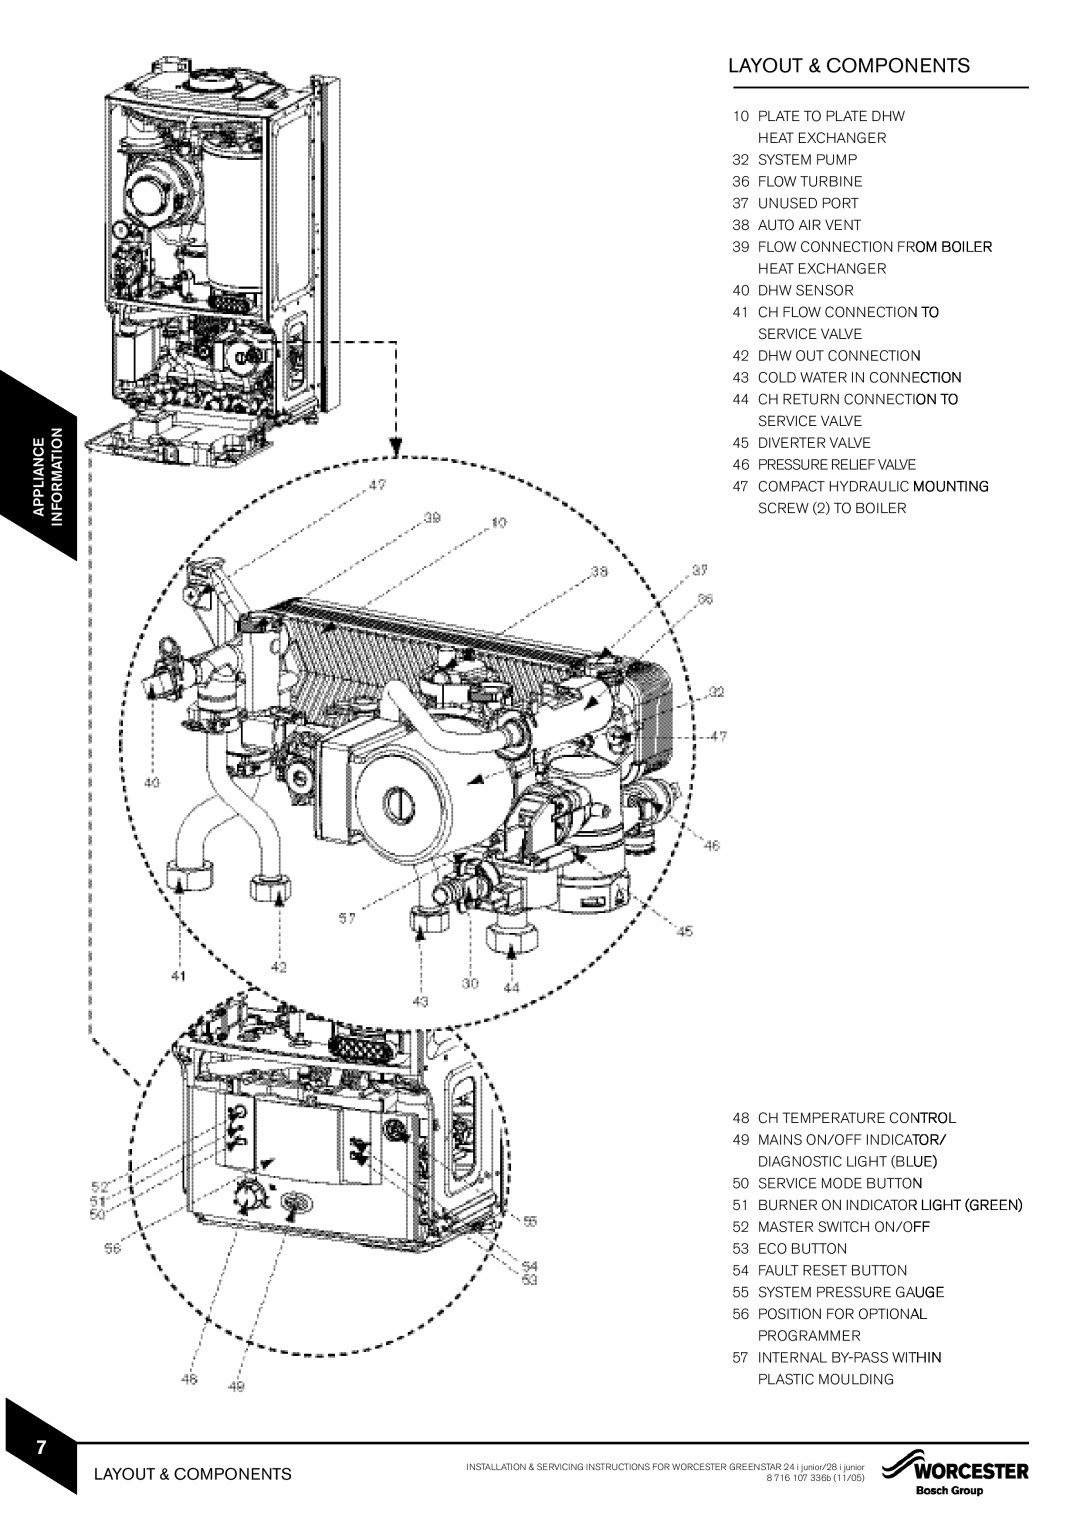 Bosch Appliances 28i junior, 24i junior manual Layout & Components, Appliance, Information 